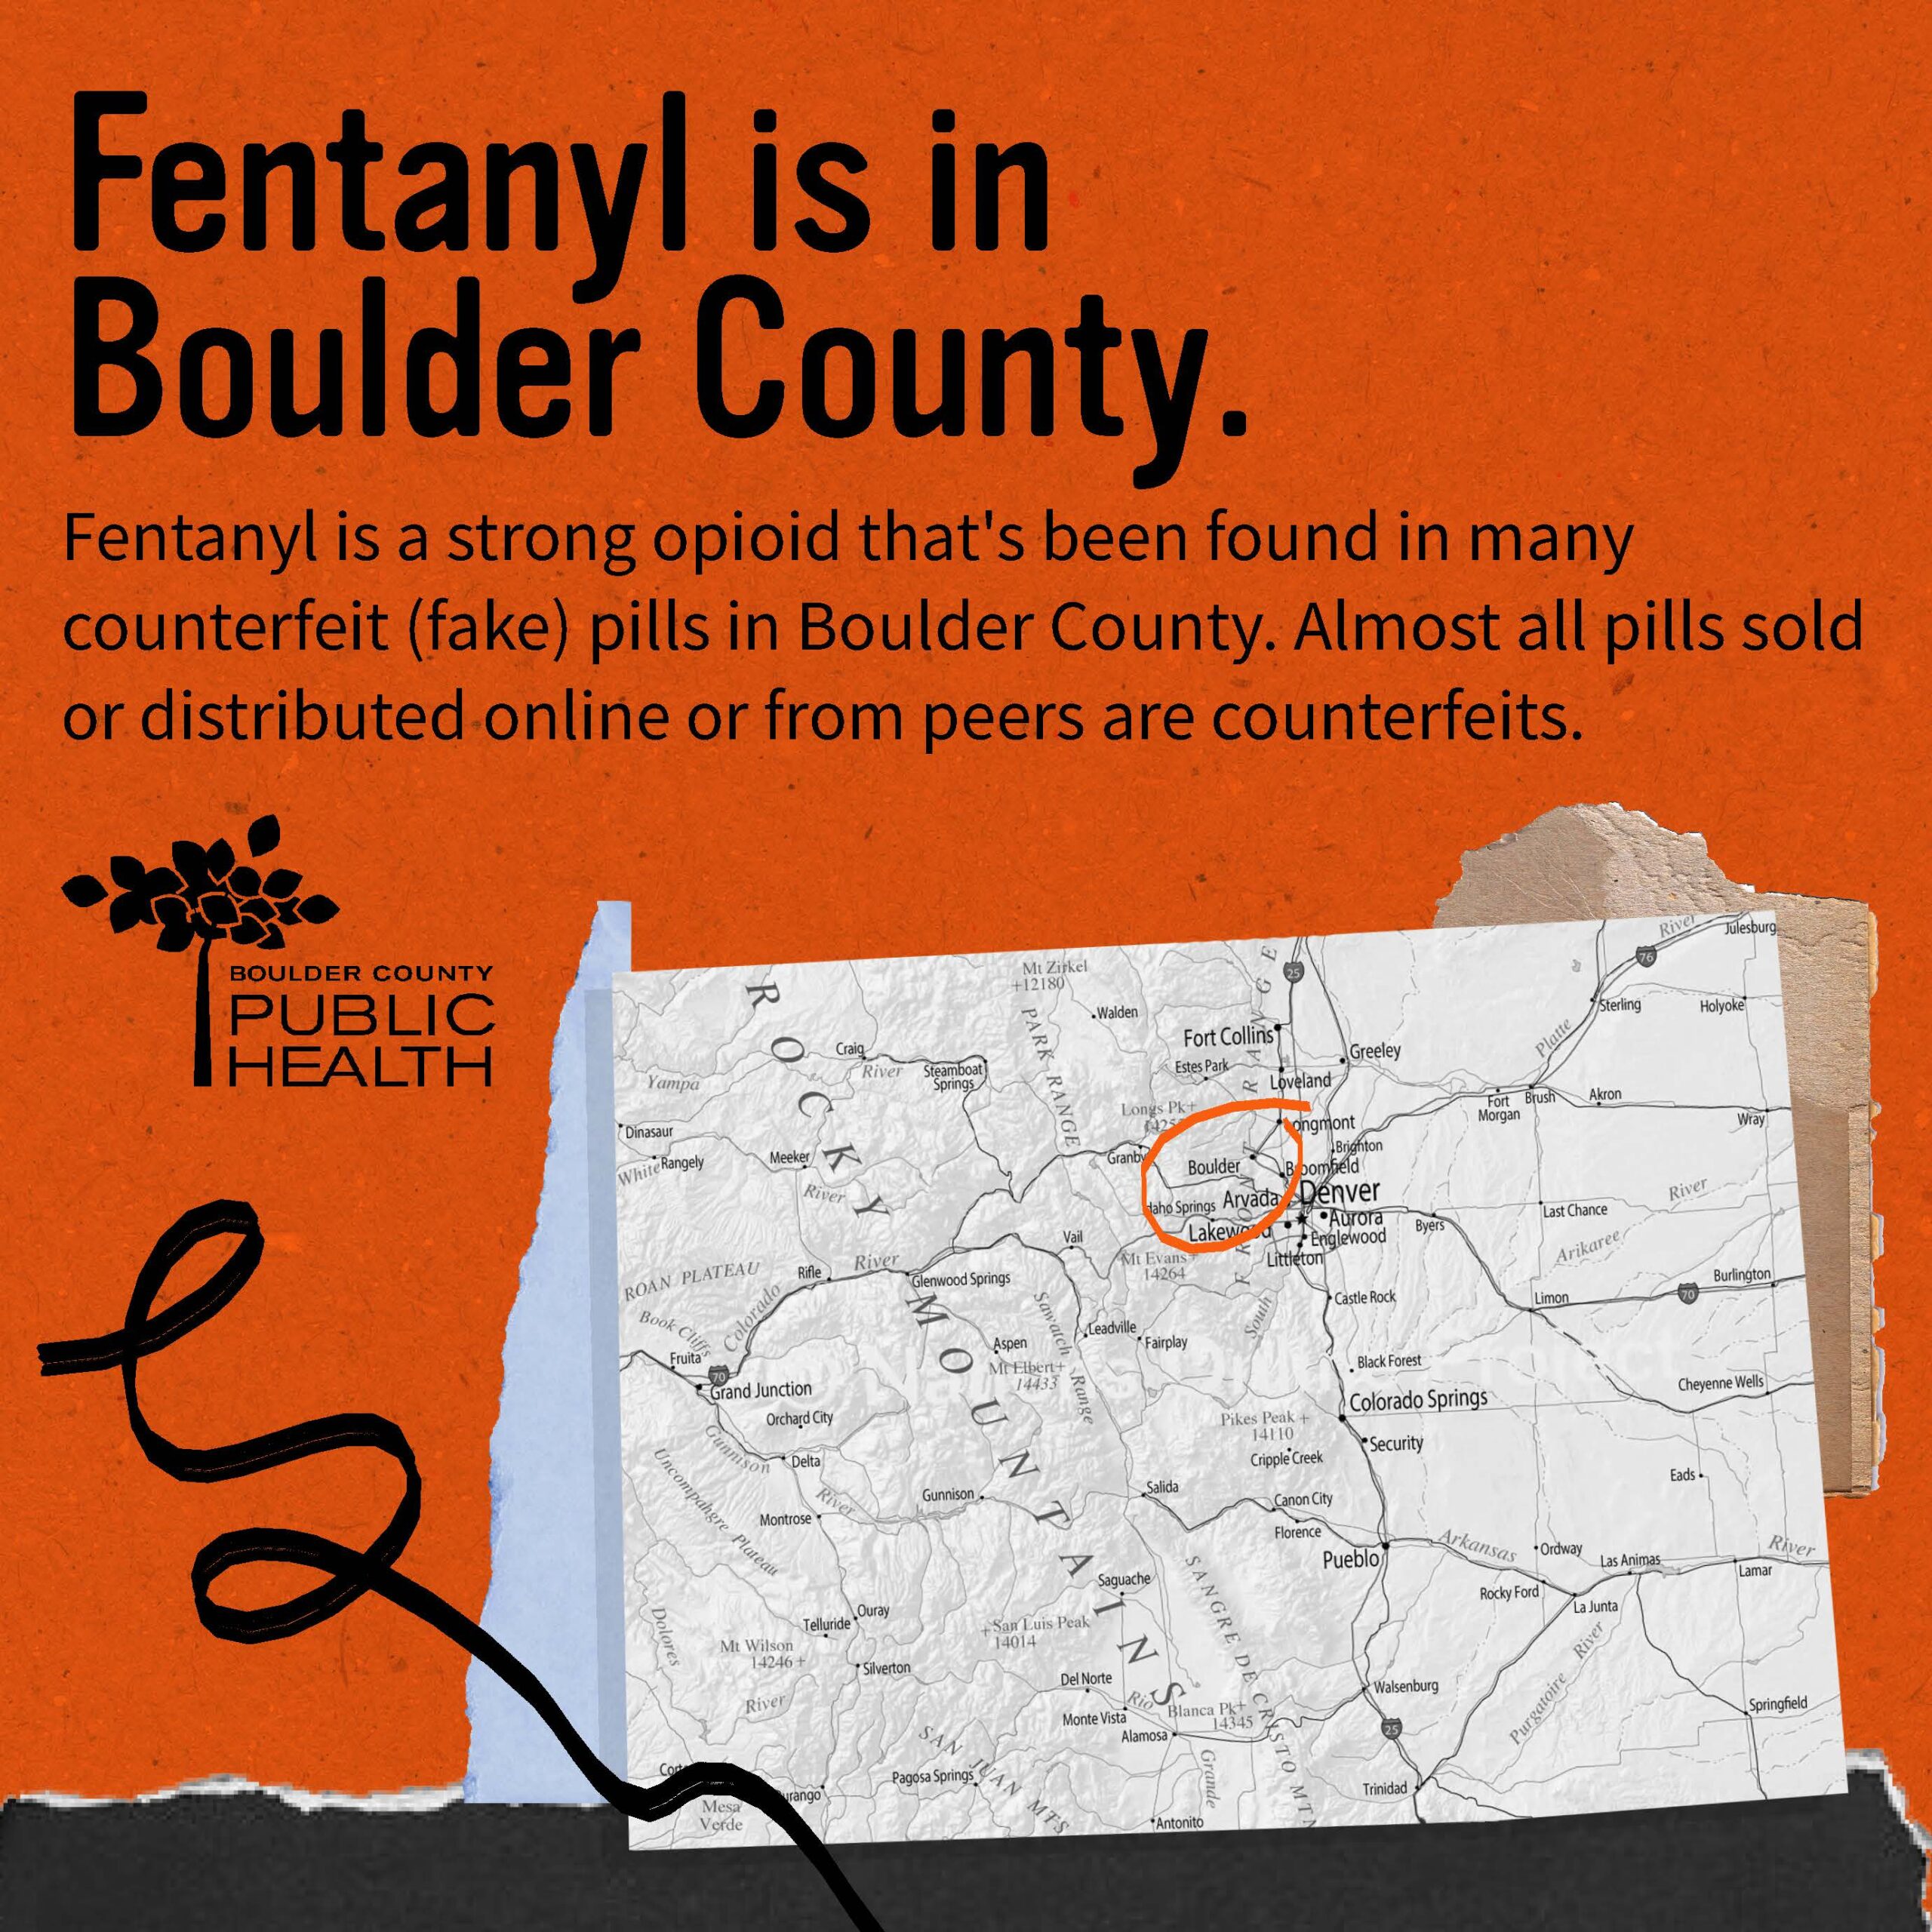 Fentanyl is in Boulder County